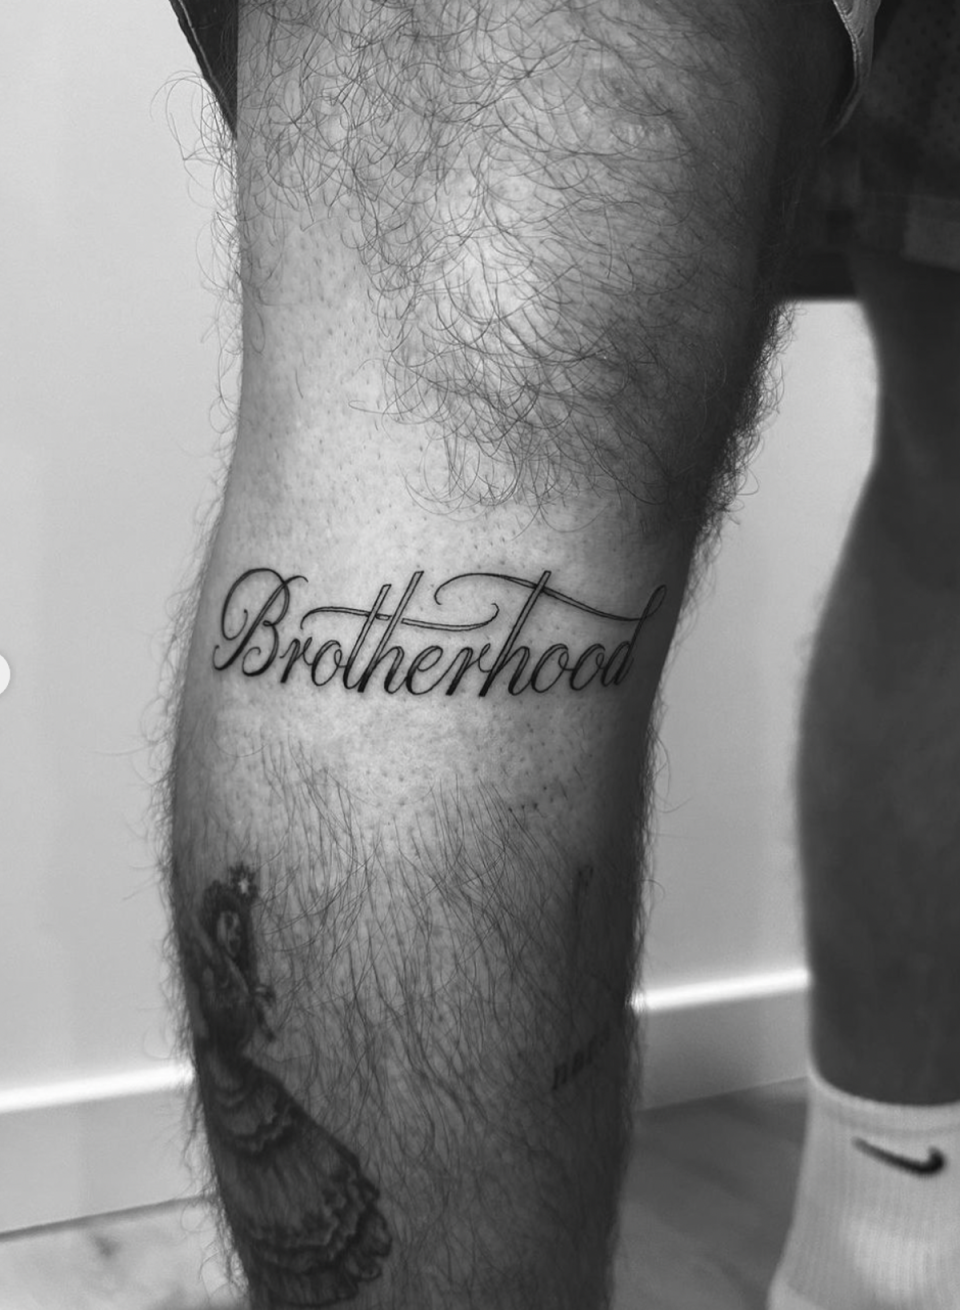 Brooklyn’s ‘Brotherhood’ tattoo on his leg (Instagram via @certifiedletterboy)